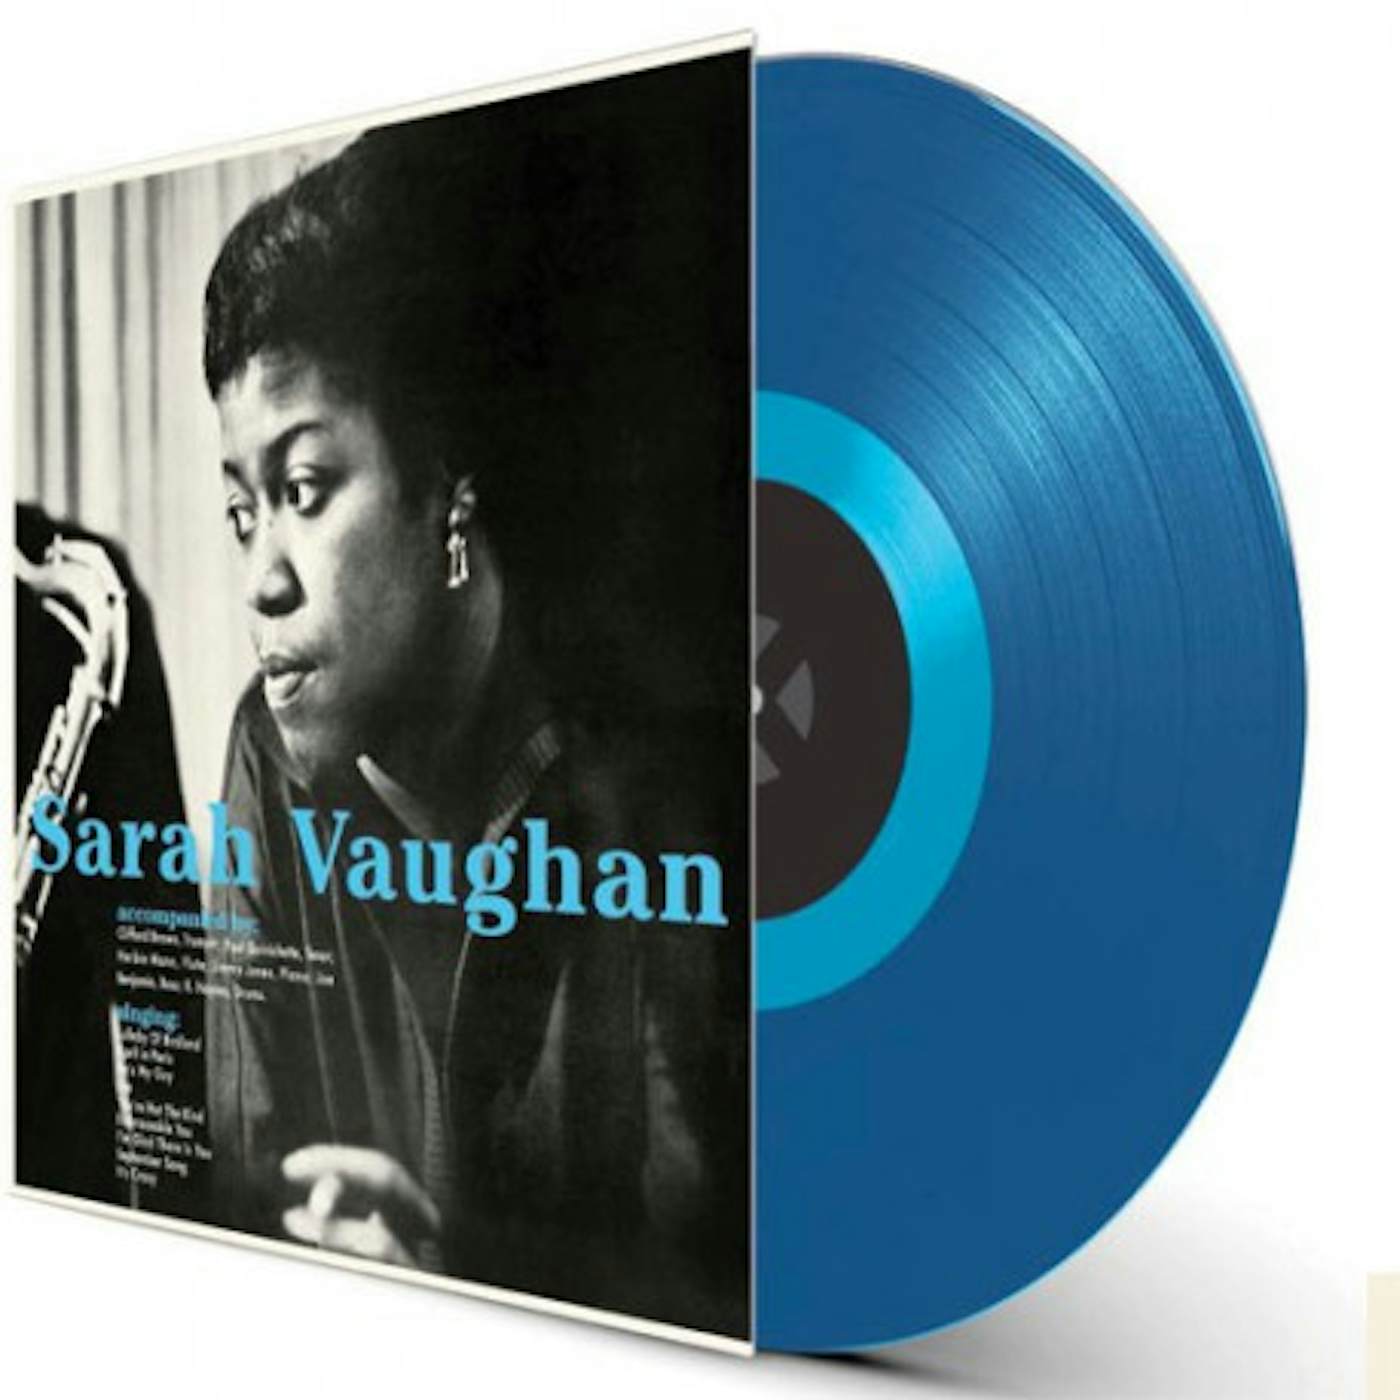 SARAH VAUGHAN WITH CLIFFORD BROWN Vinyl Record - Blue Vinyl, Colored Vinyl